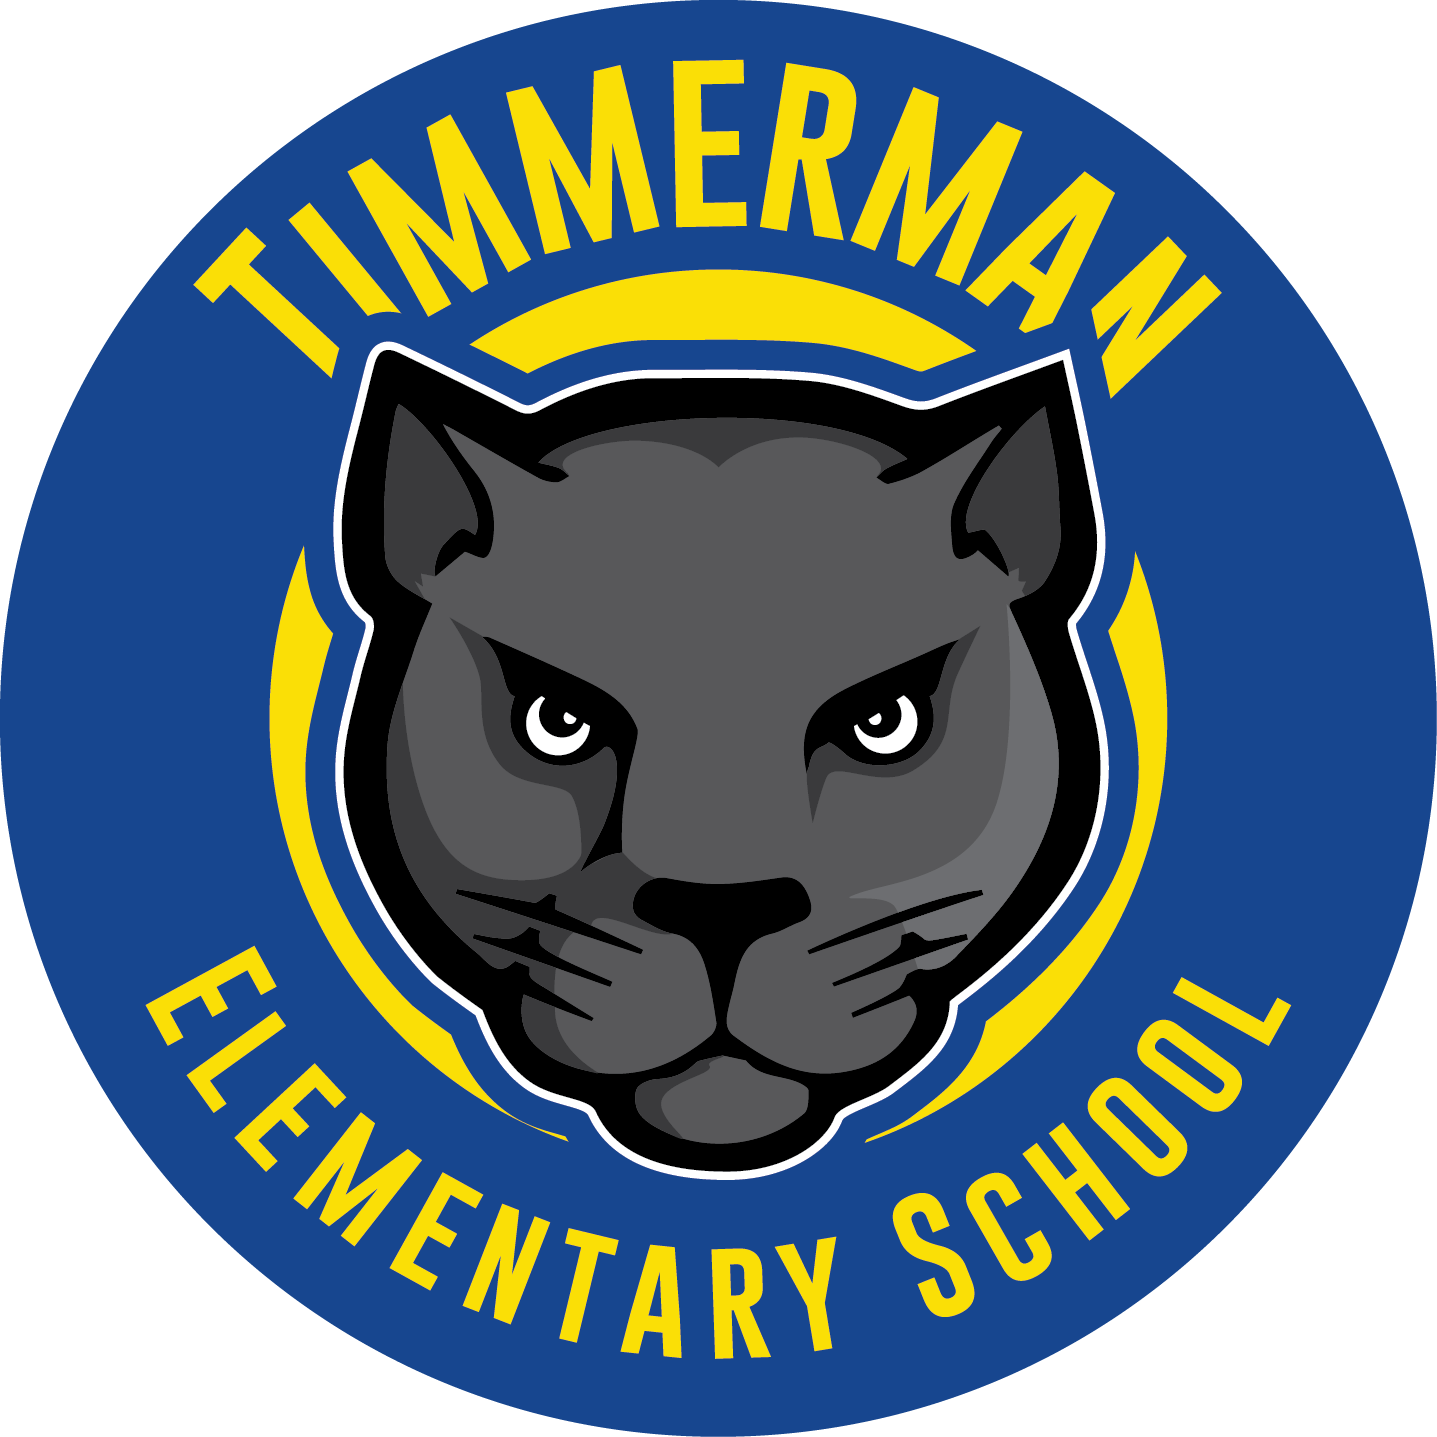 Timmerman Elementary School - Timmerman Elementary School Logo (1437x1437)